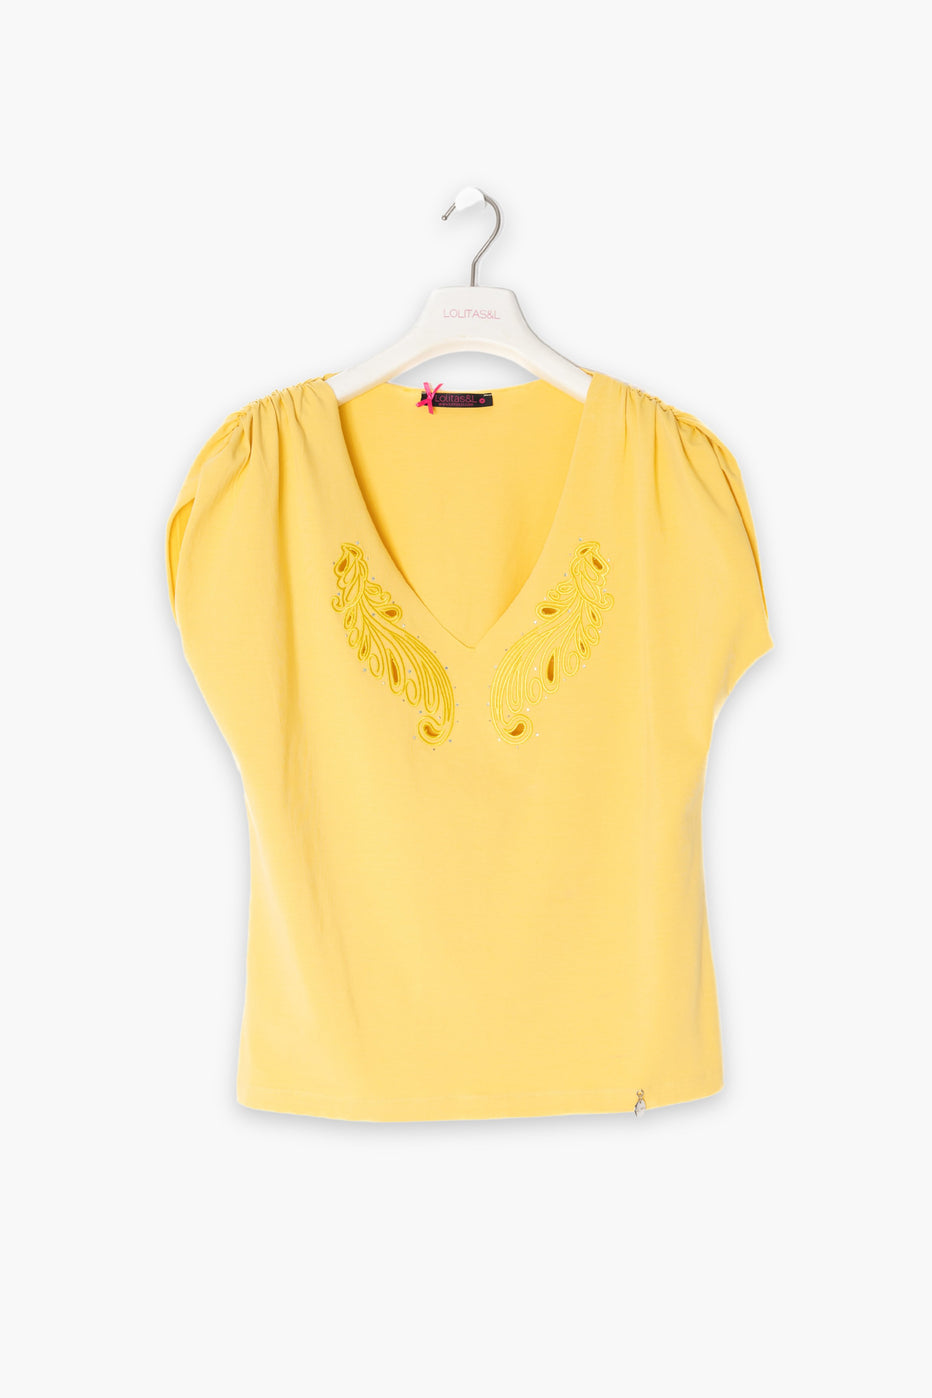 Camiseta amarilla bordada con recogido en hombros LolitasyL - lolitasyl.com